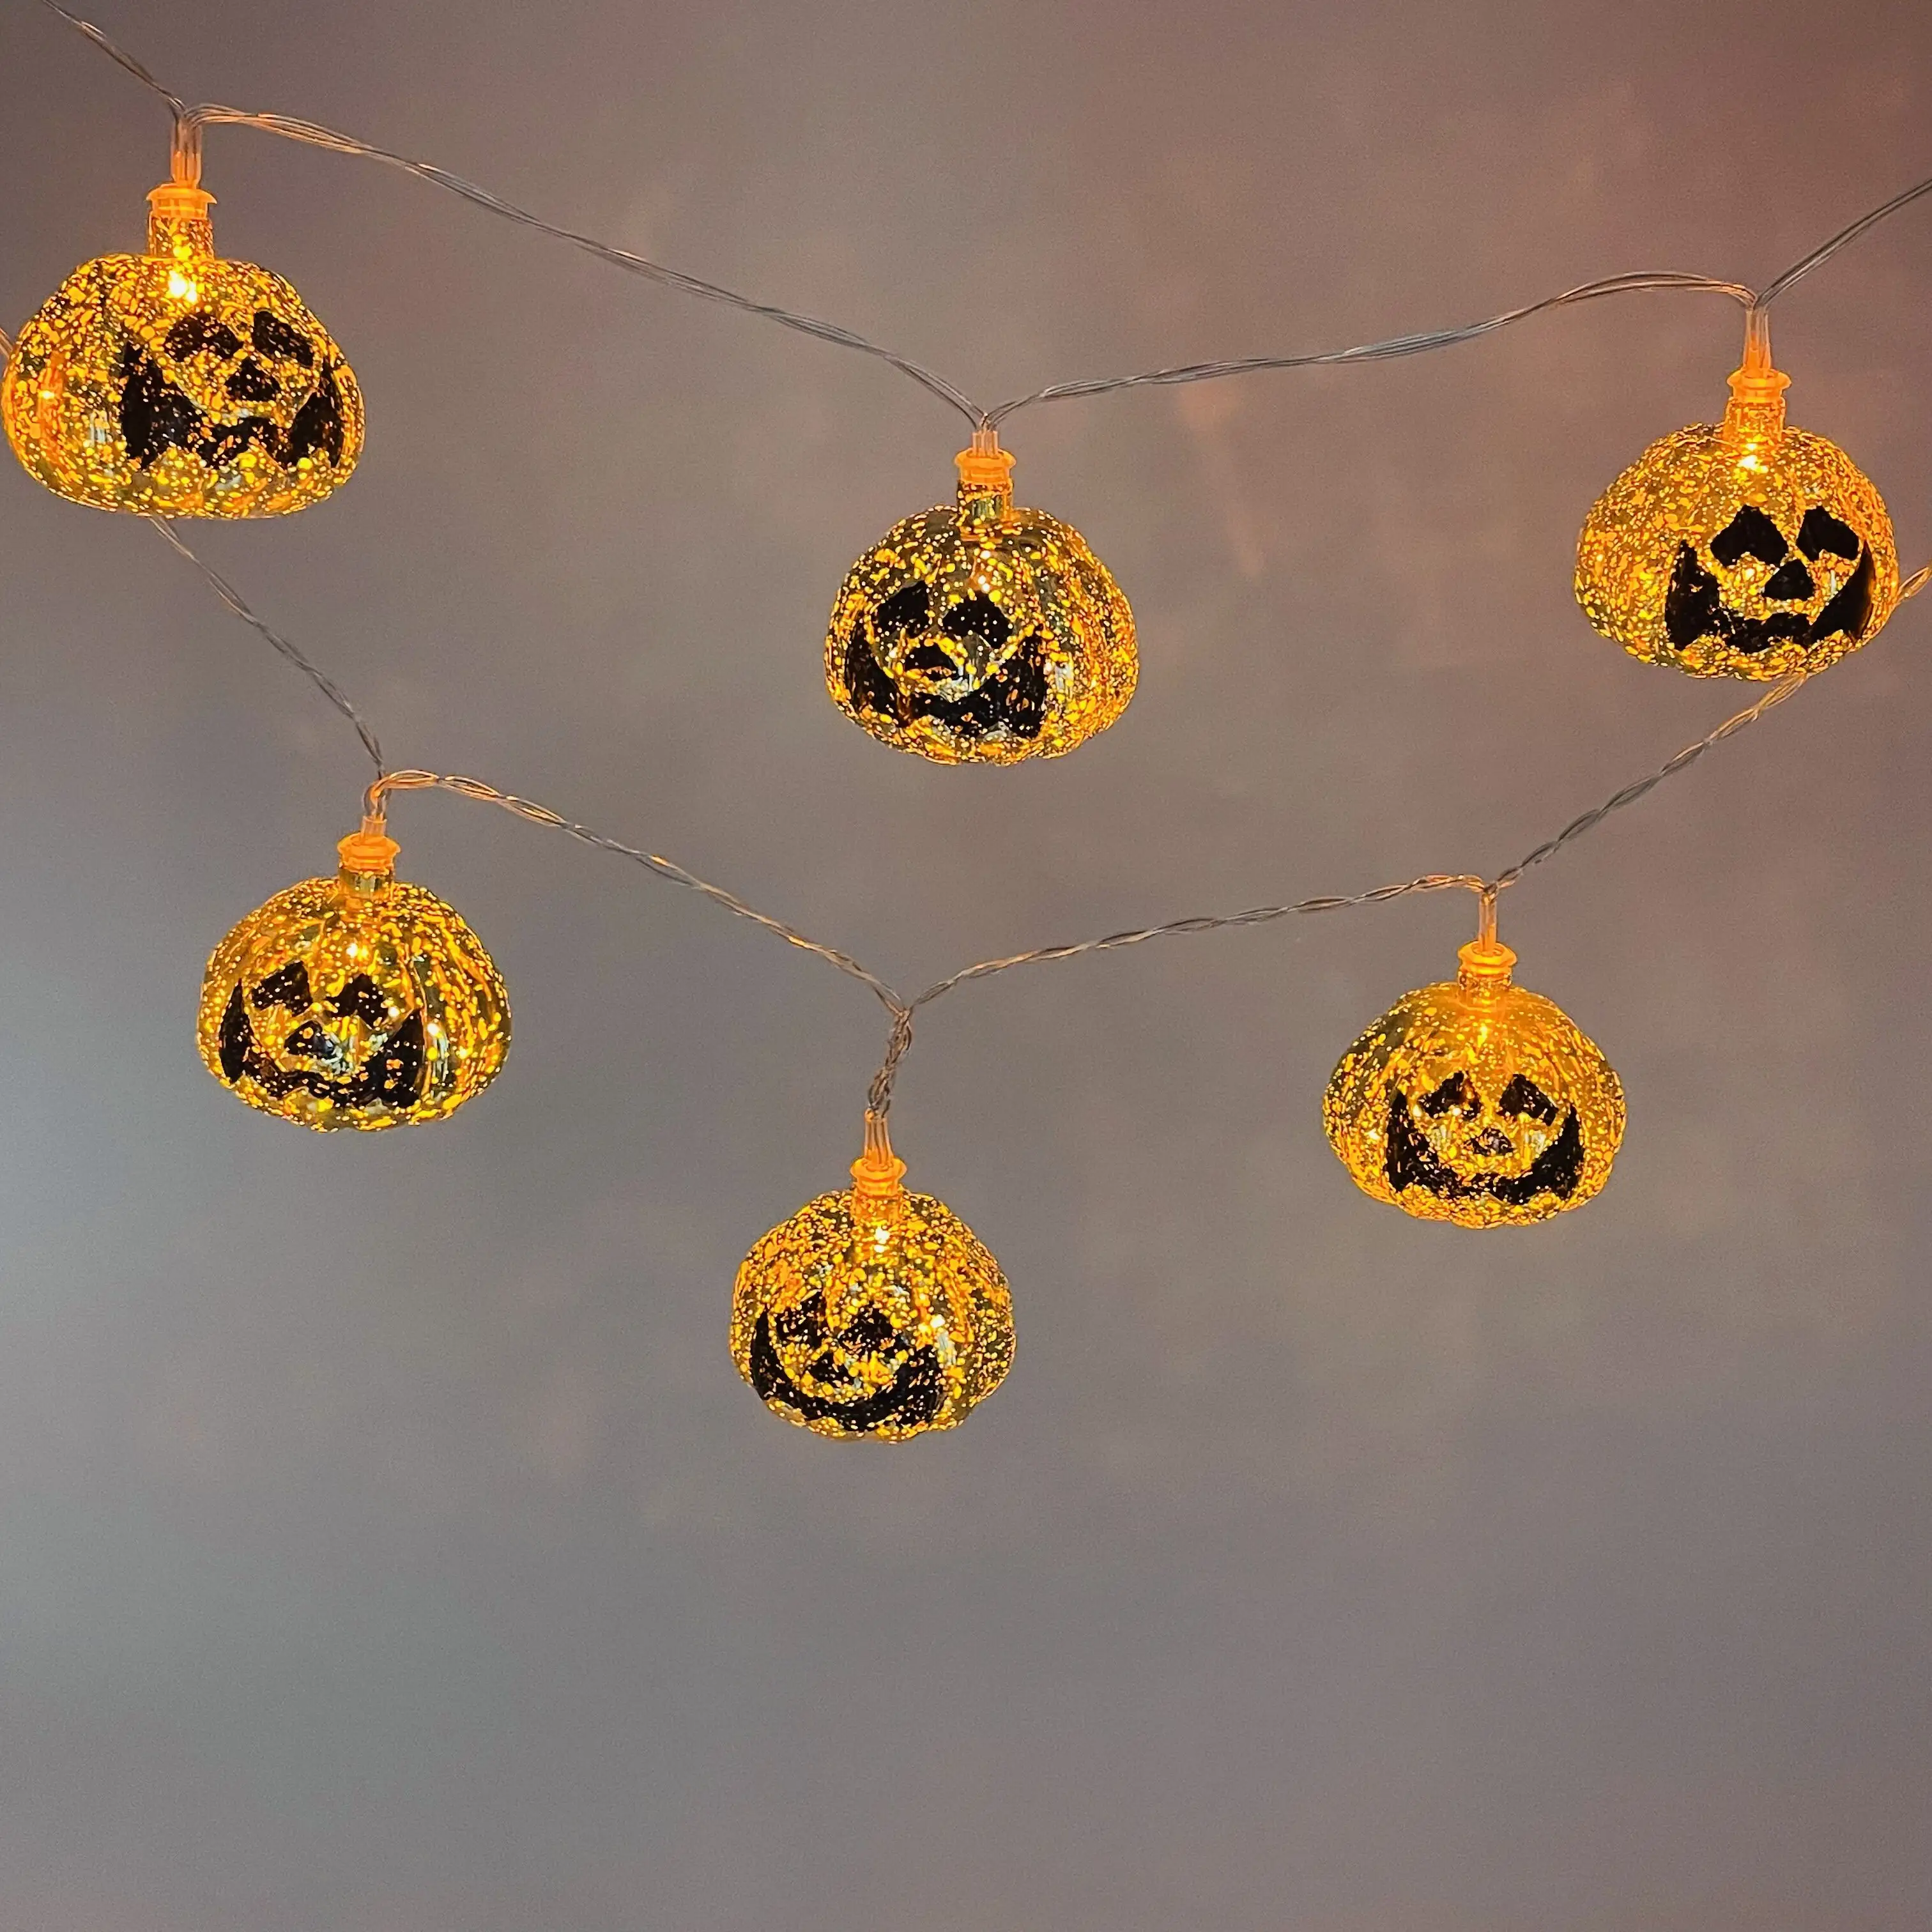 2023 Halloween Decoration 10 LED Mercury Gold Pumpkin Lights String Battery Lighted Up Plastic Jack O' Lantern For Party